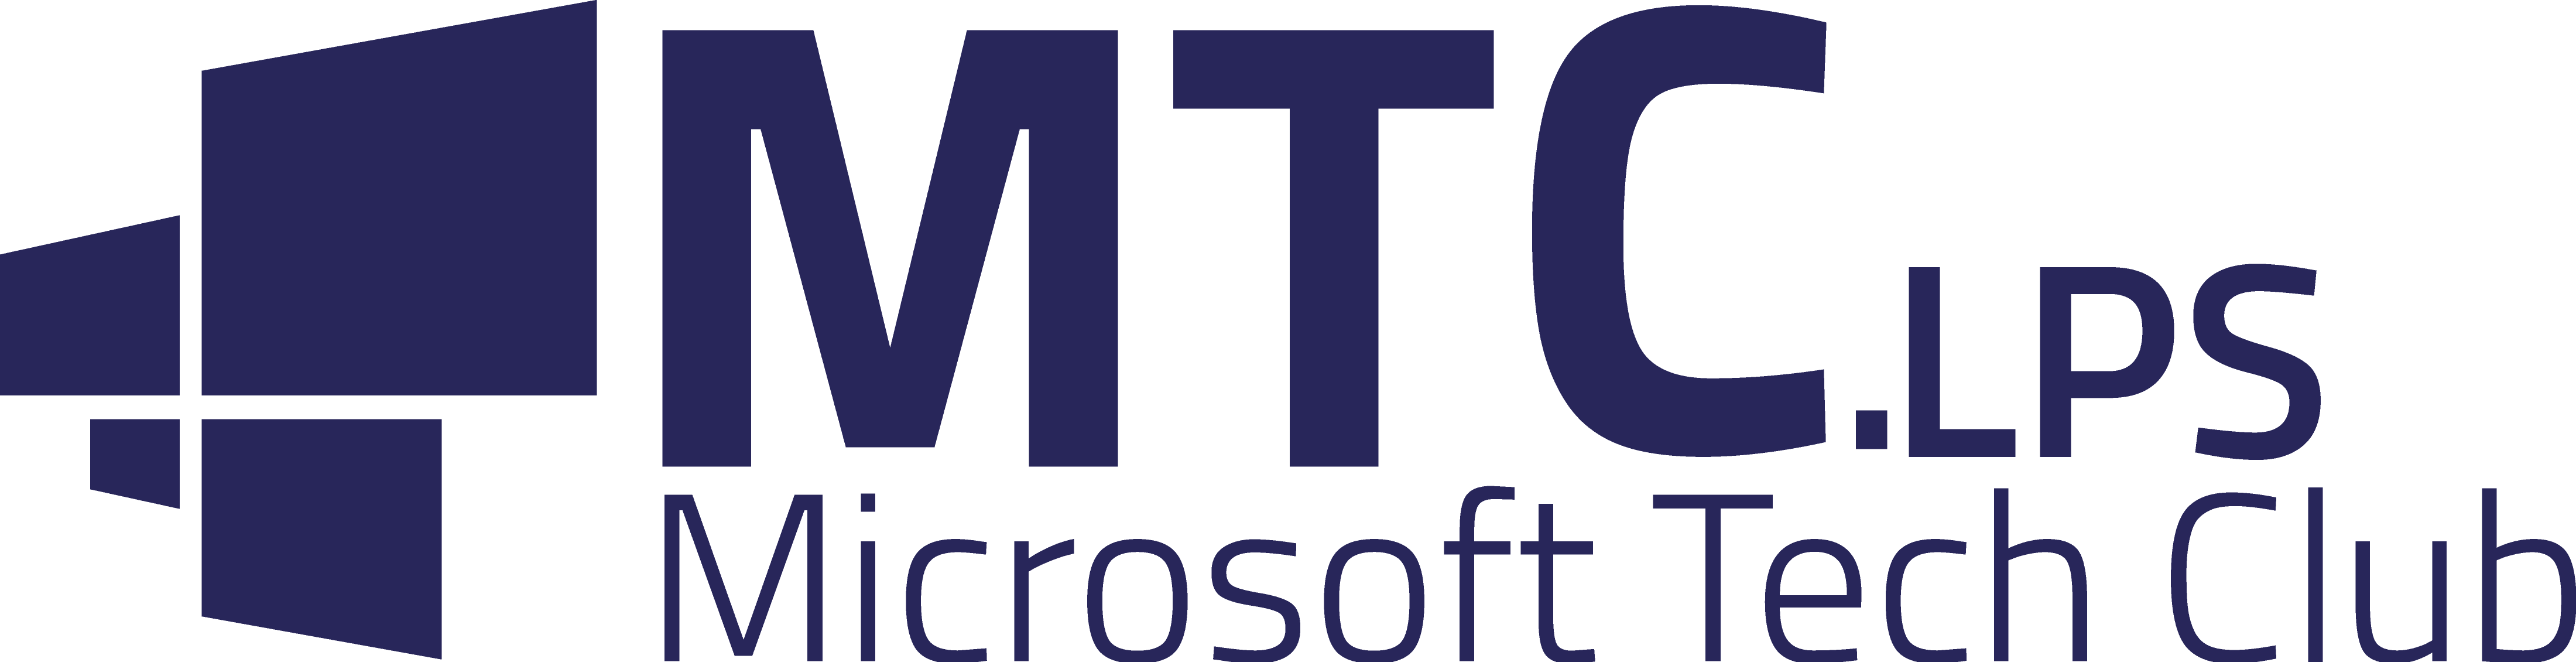 Microsoft Tech Logo - MTC LPS - Microsoft Tech Club Main page